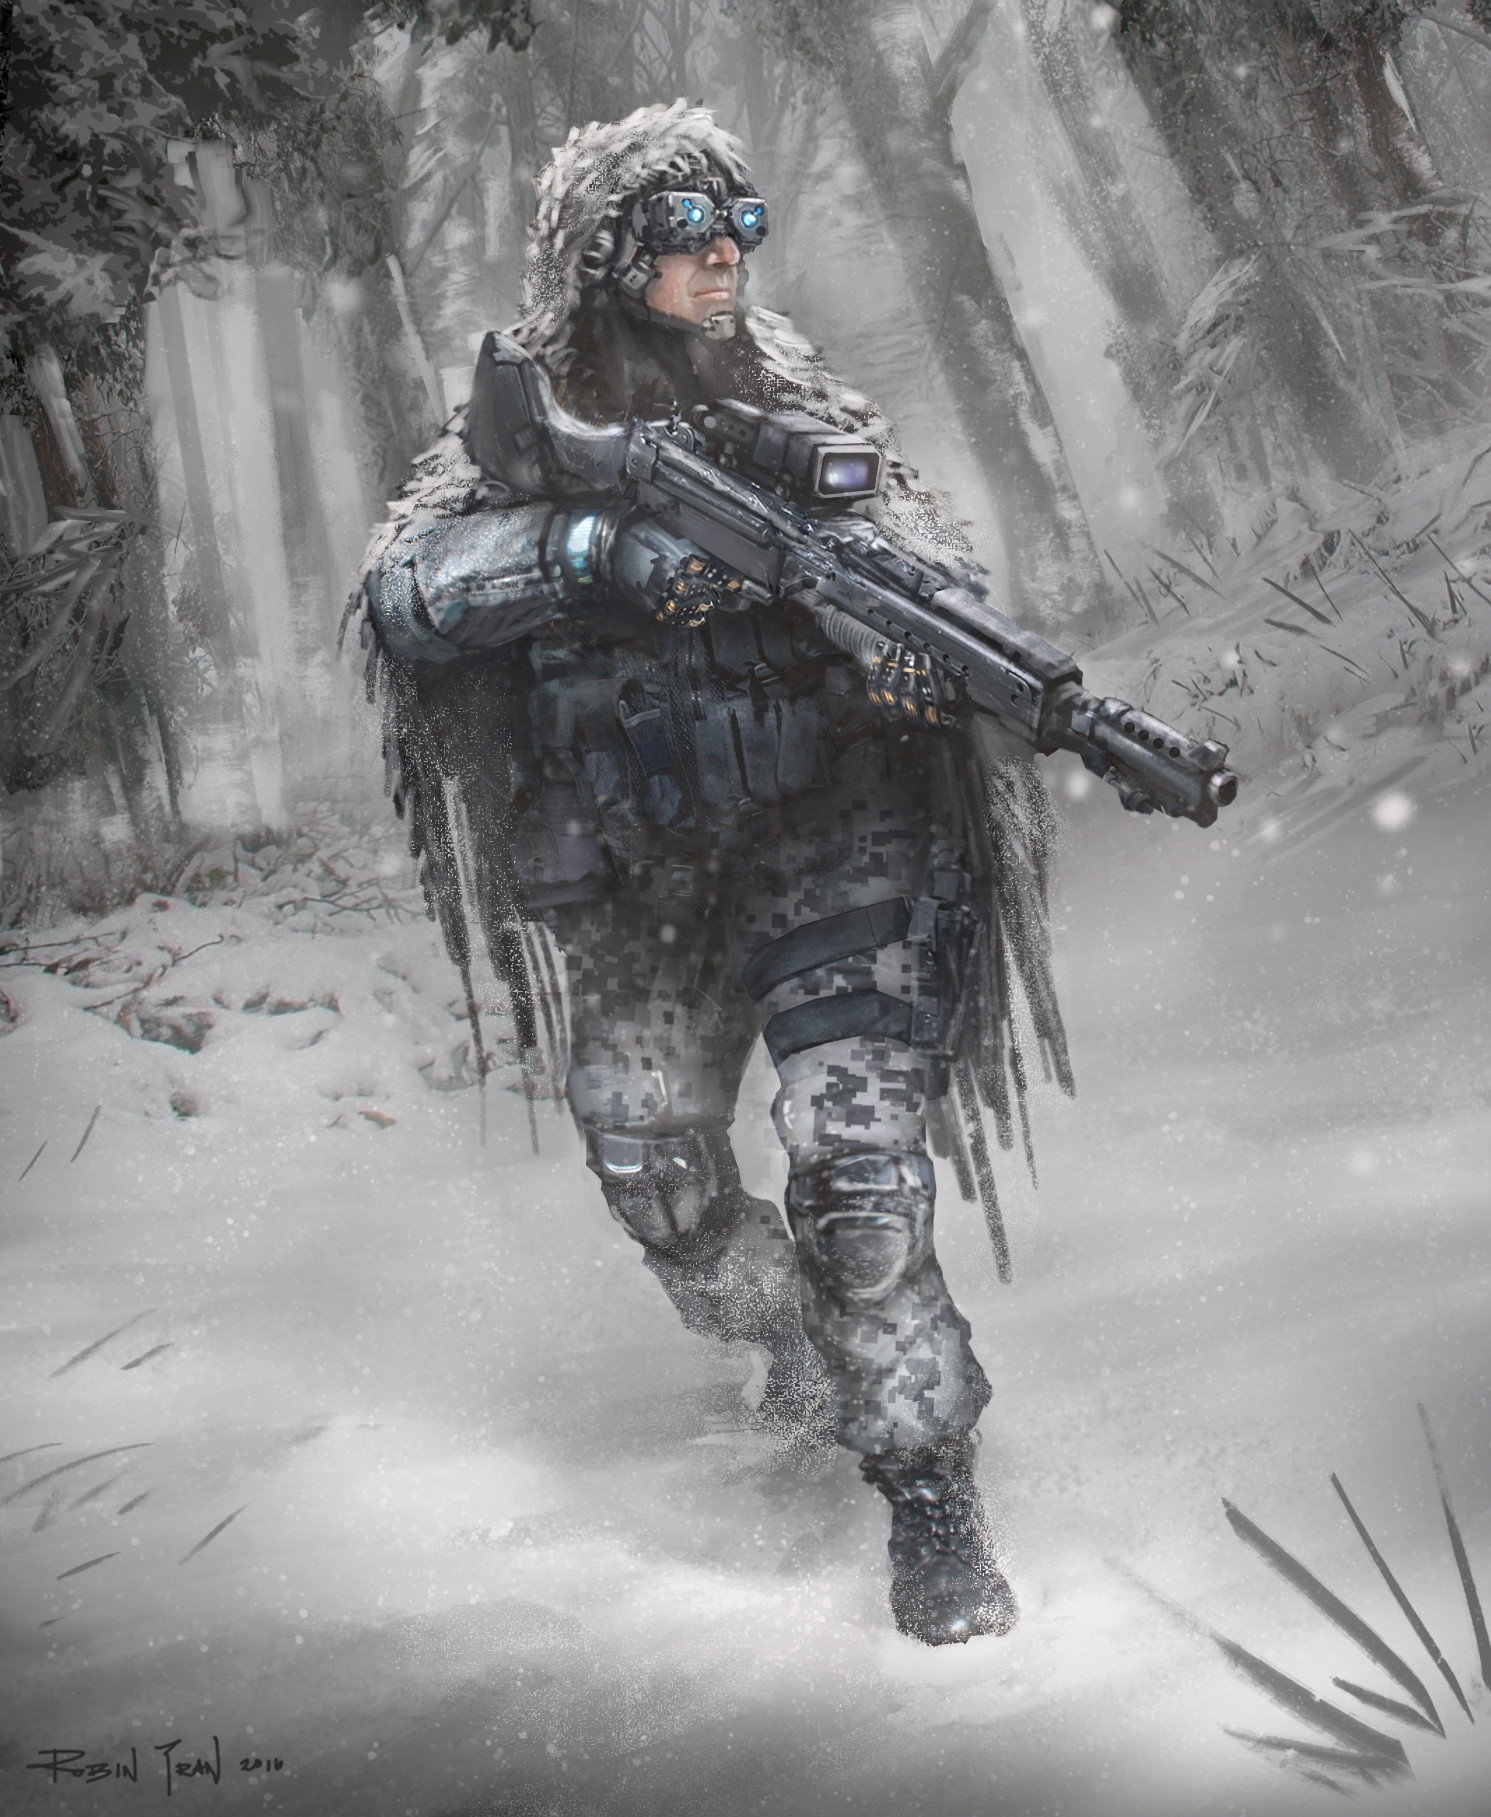 ArtStation - Daily Draw - Snow Soldier, Robin Tran